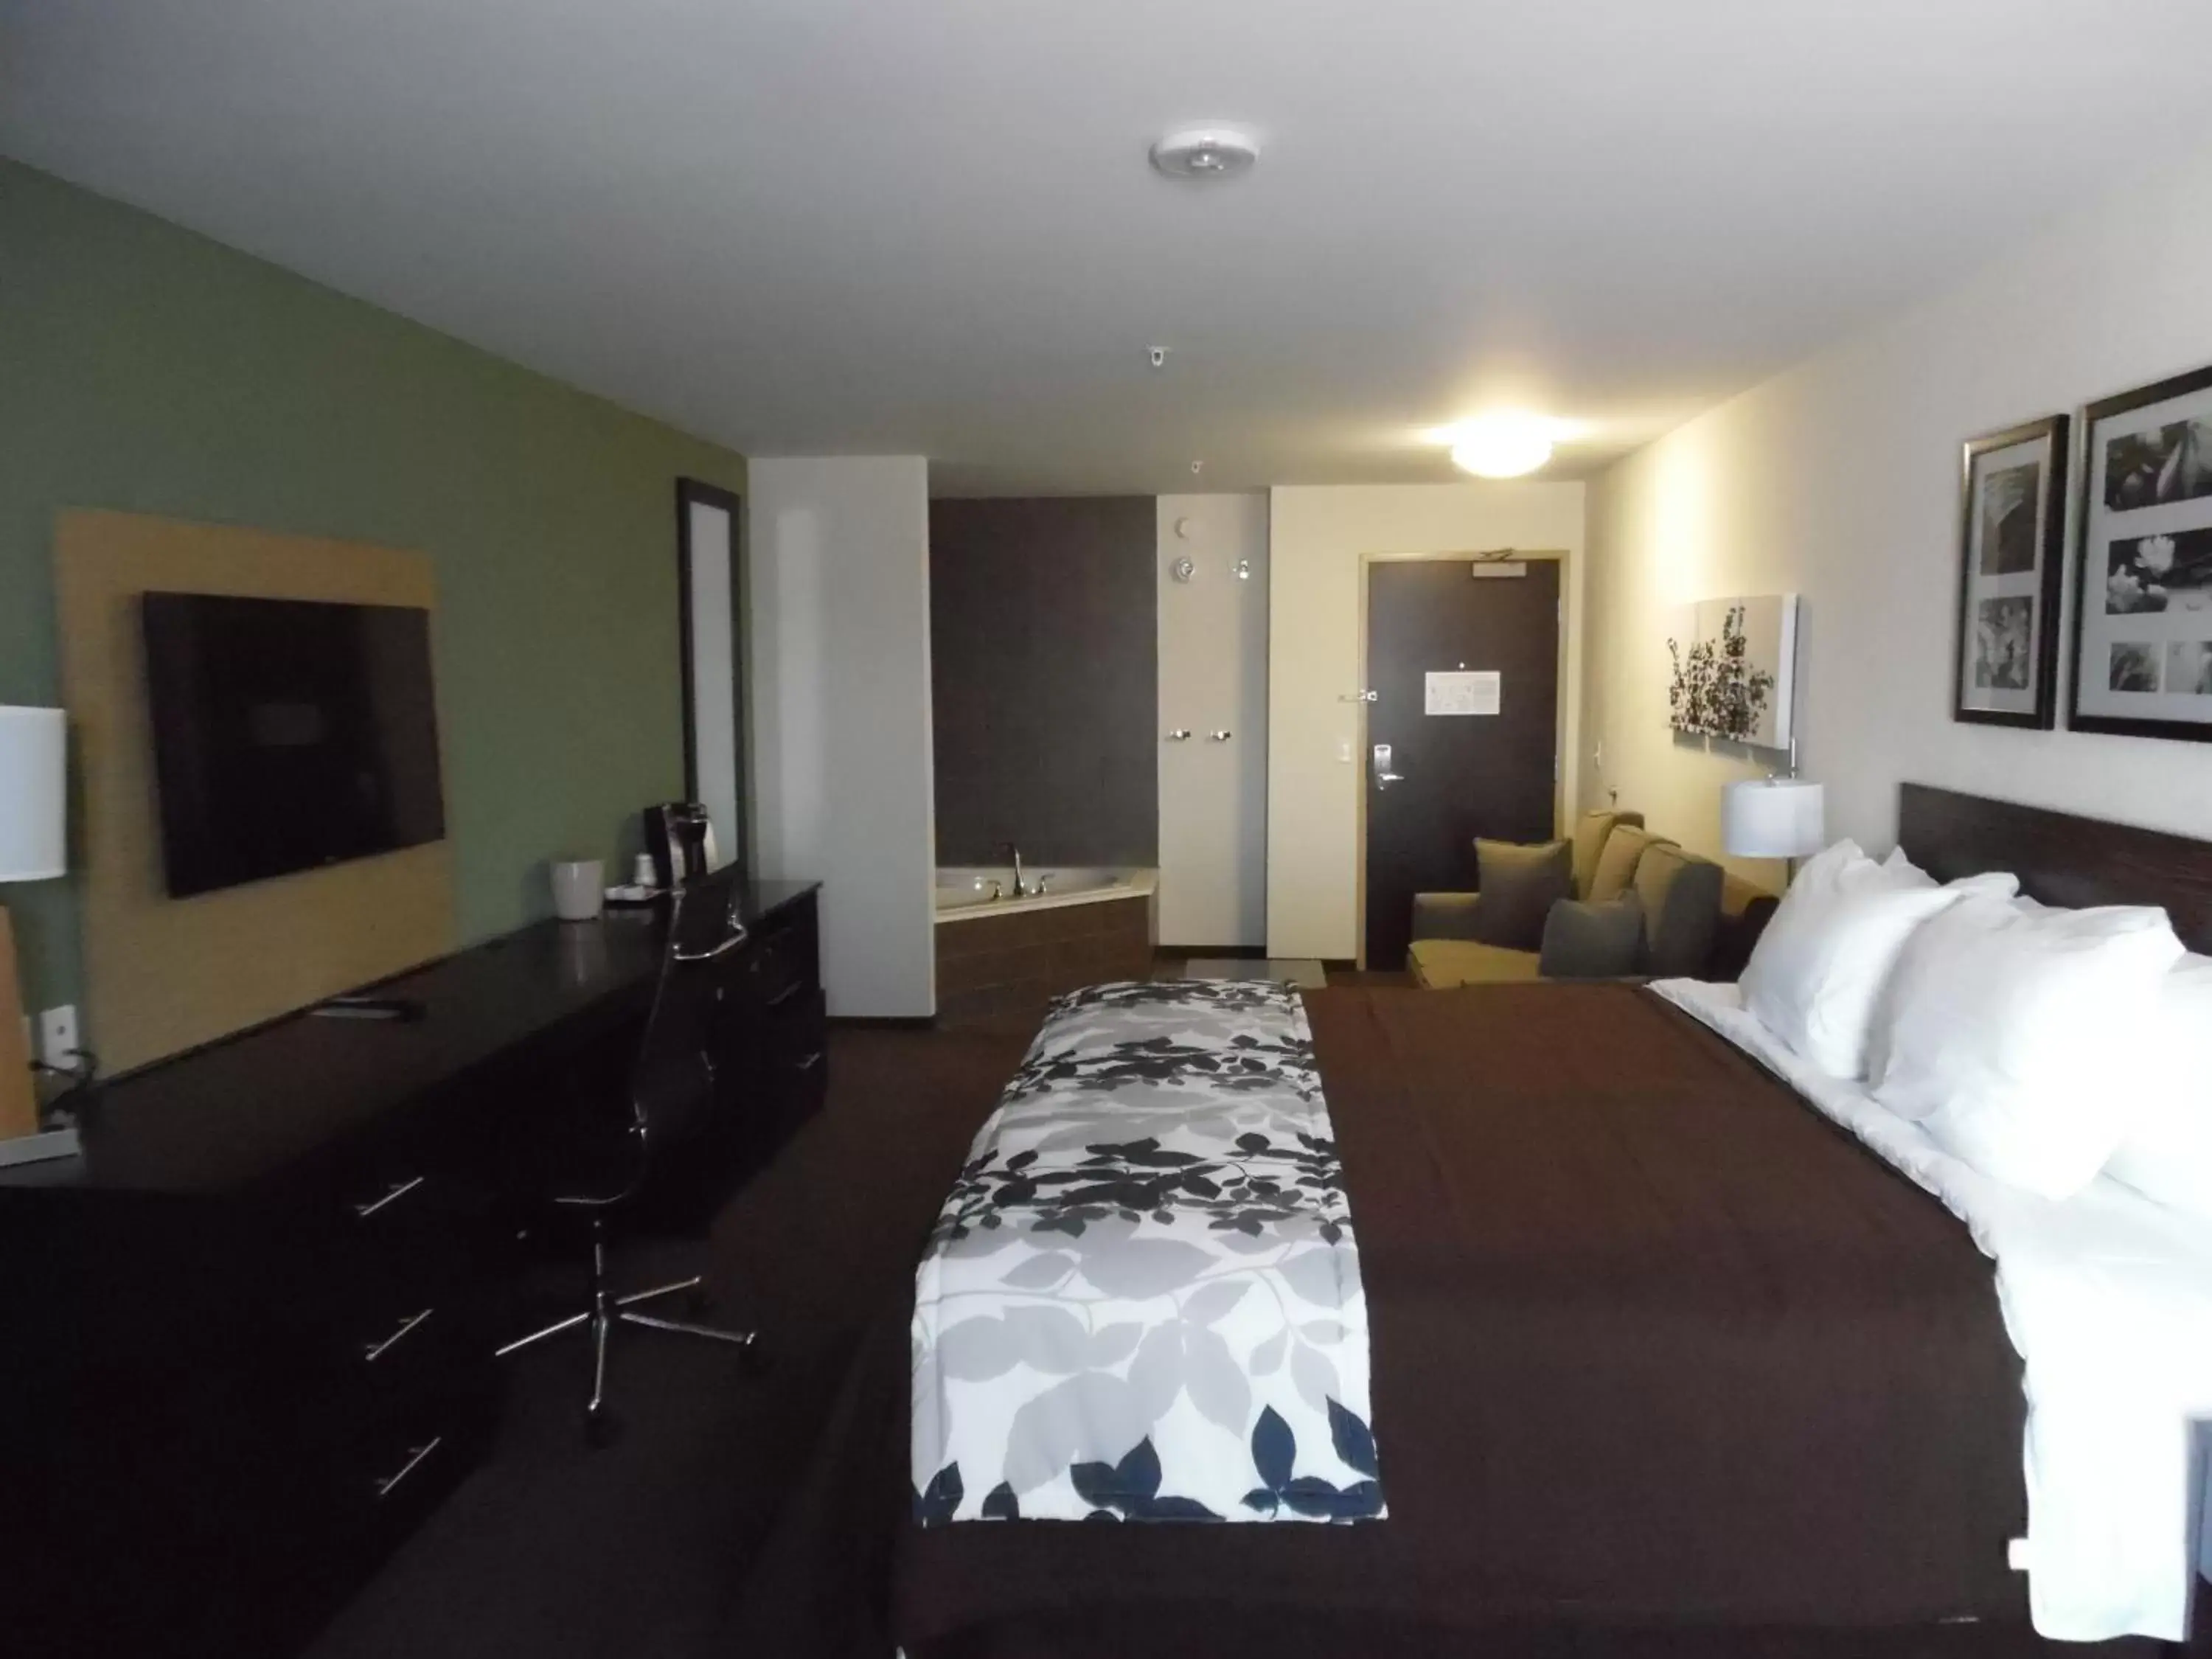 Shower, Room Photo in Sleep Inn & Suites East Syracuse